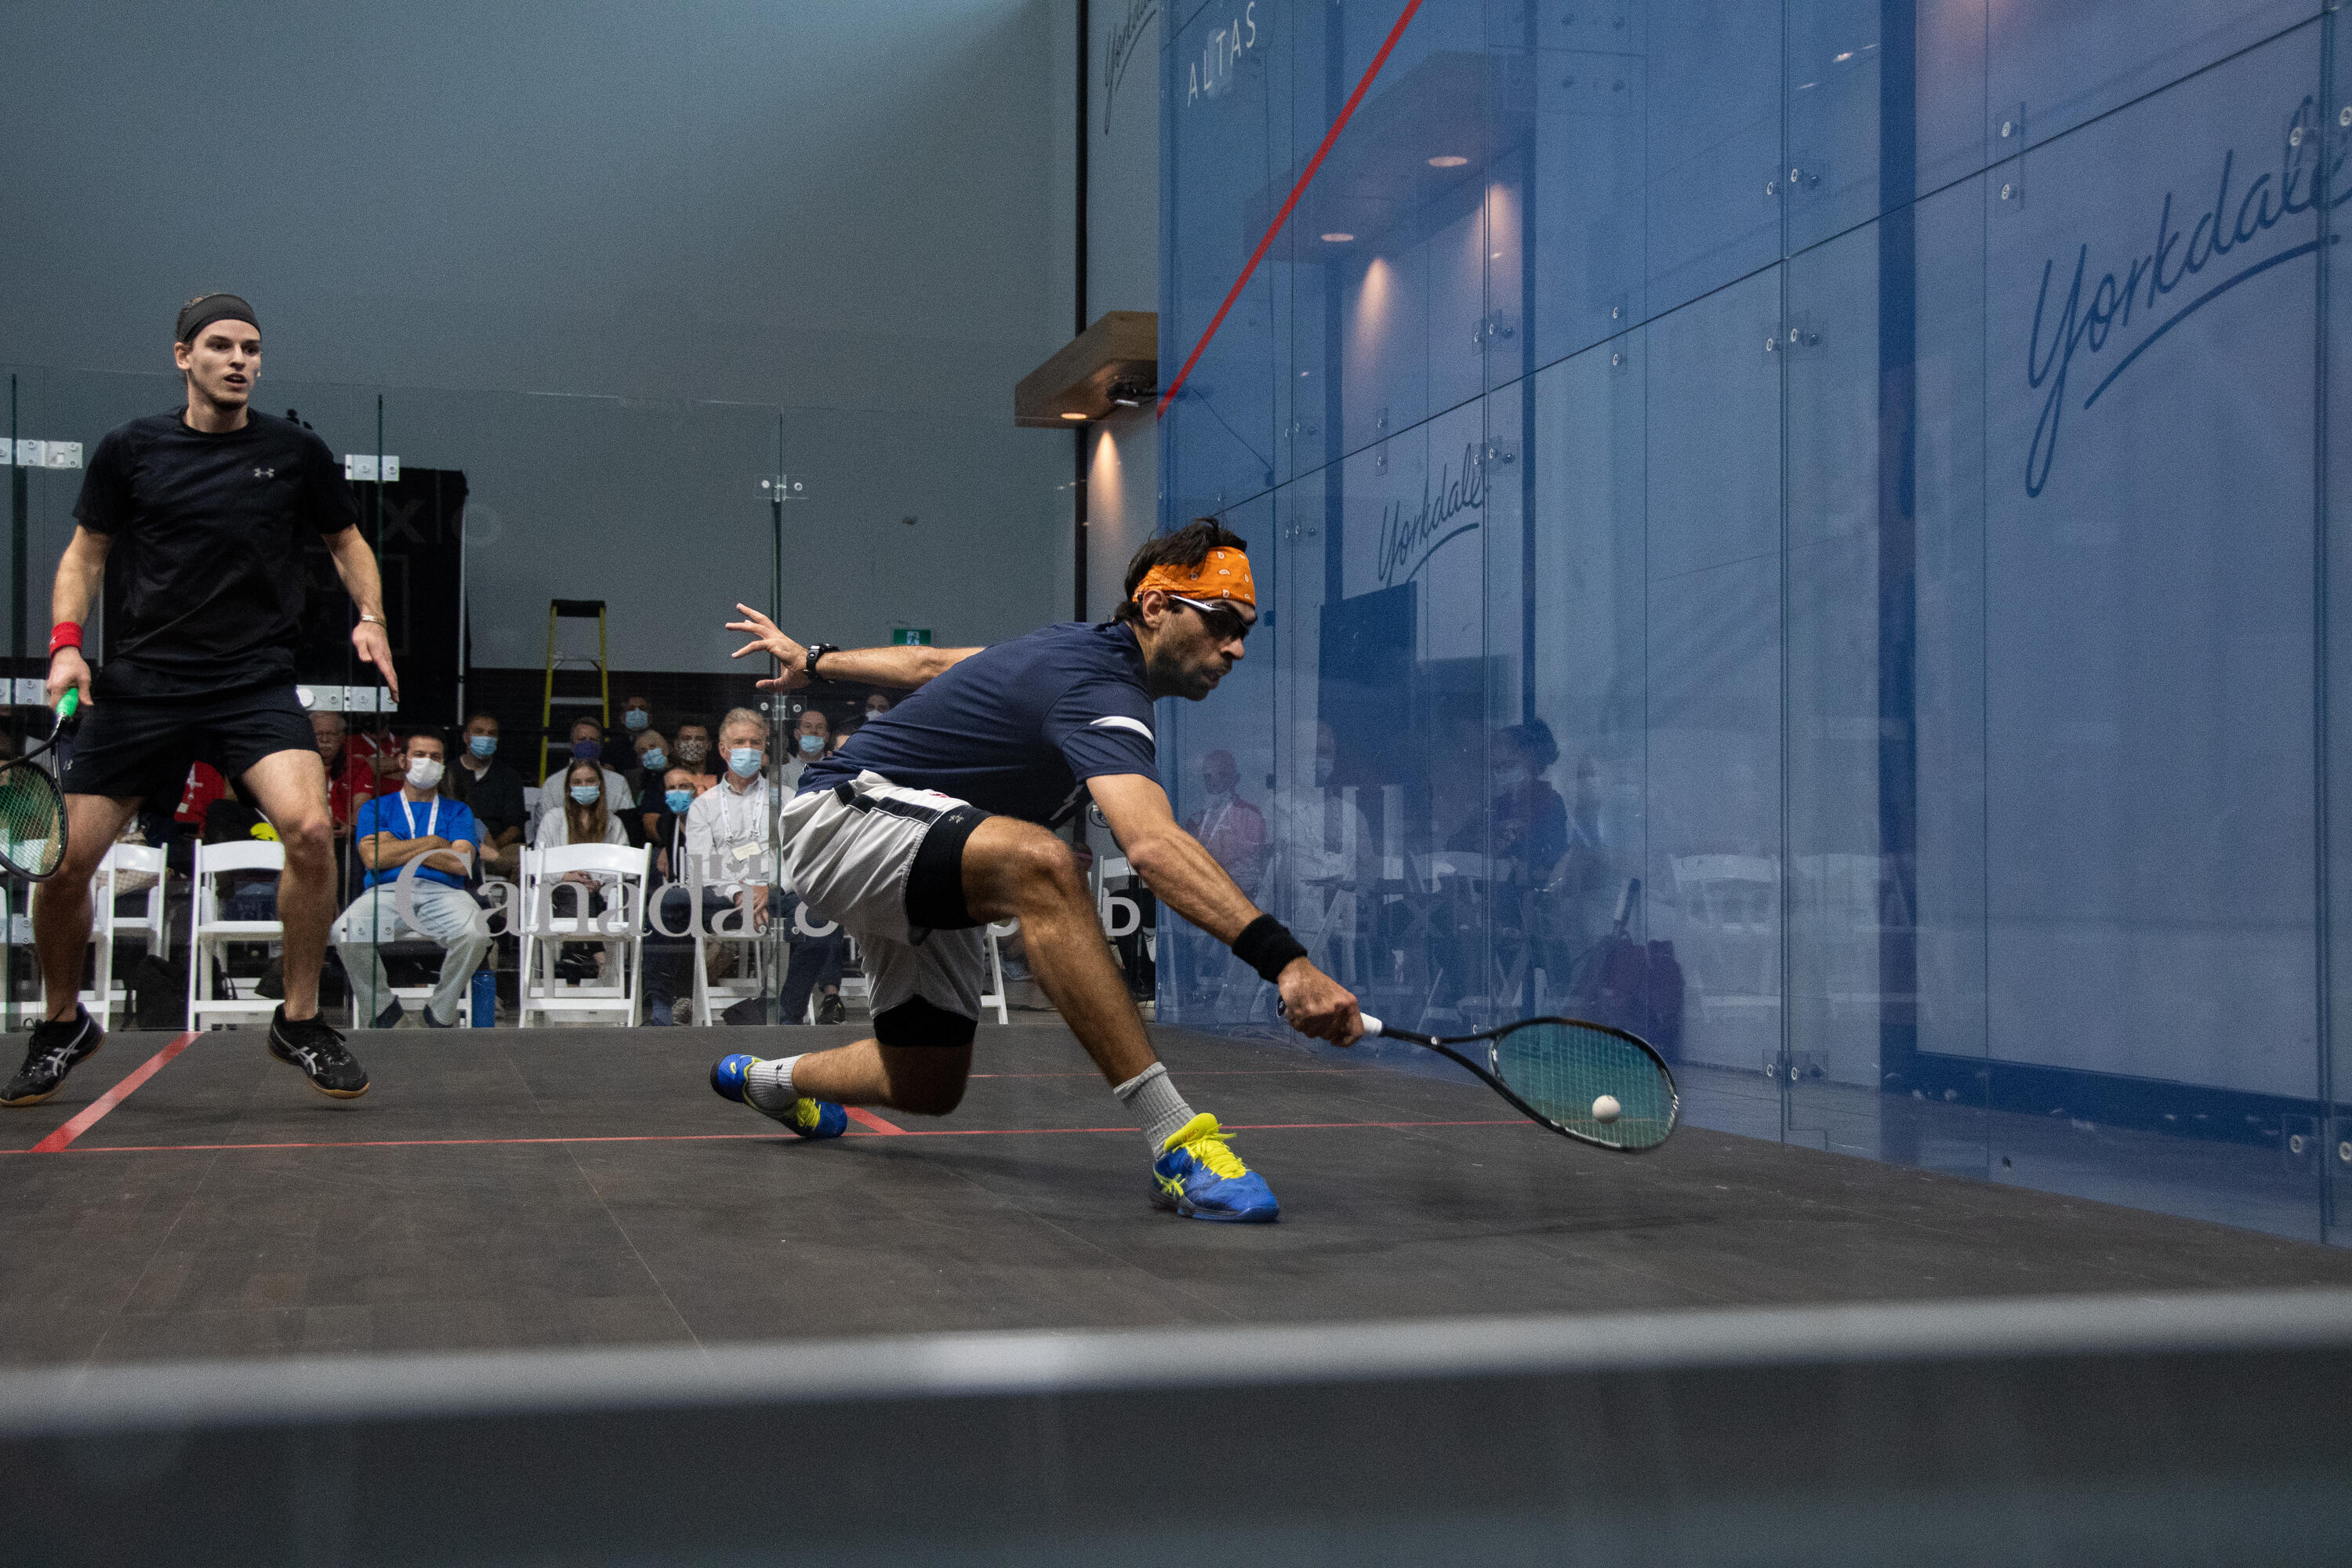 Cameron Seth on the squash court